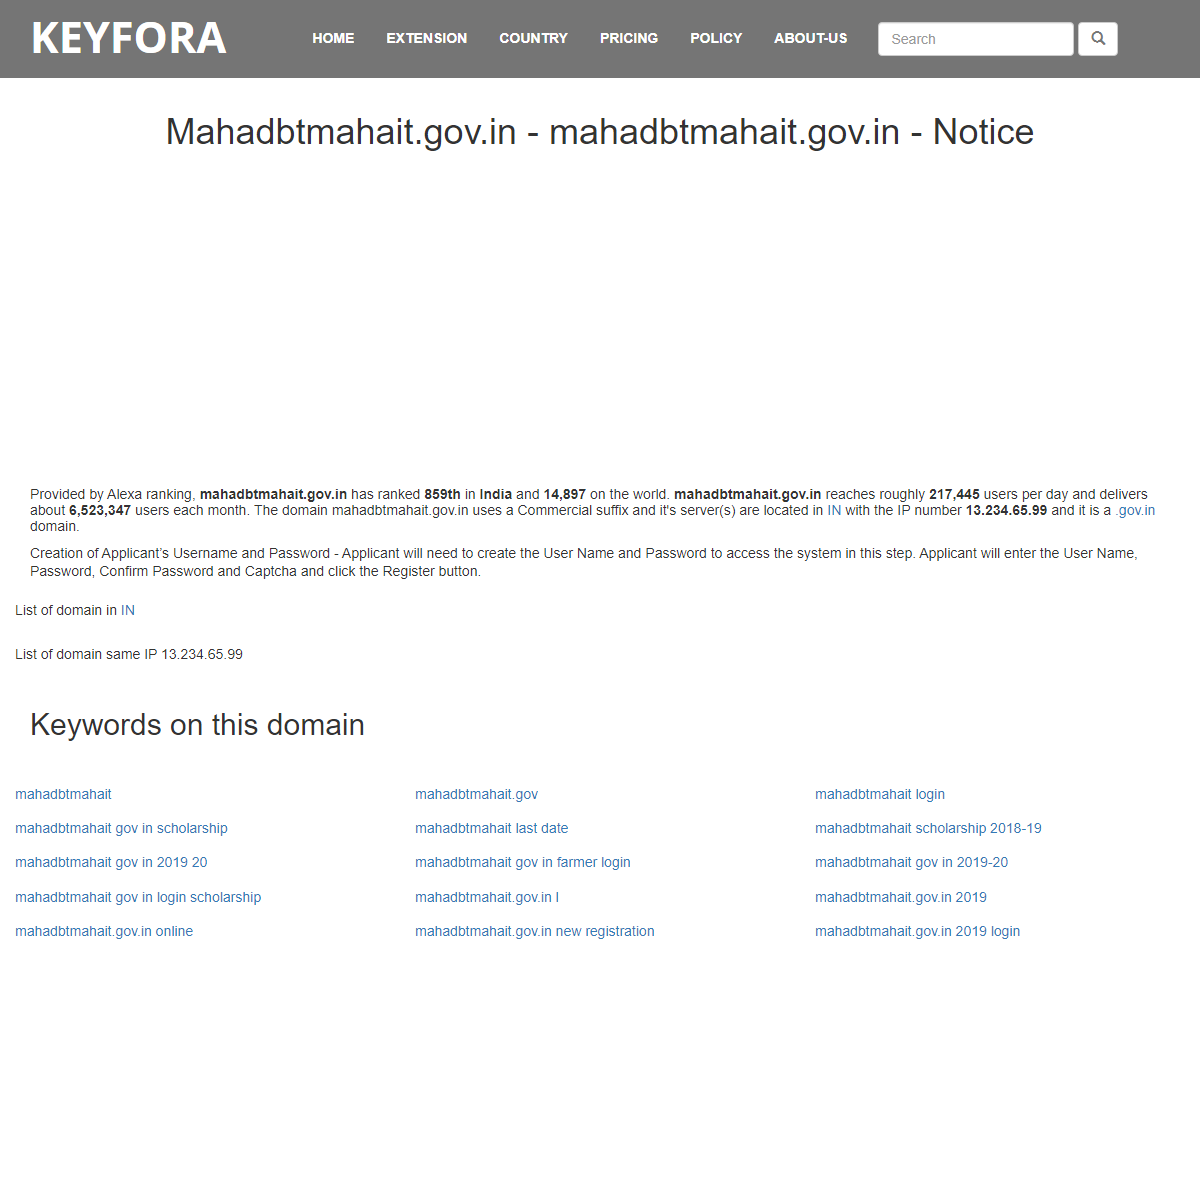 A complete backup of https://www.keyfora.com/site/mahadbtmahait.gov.in